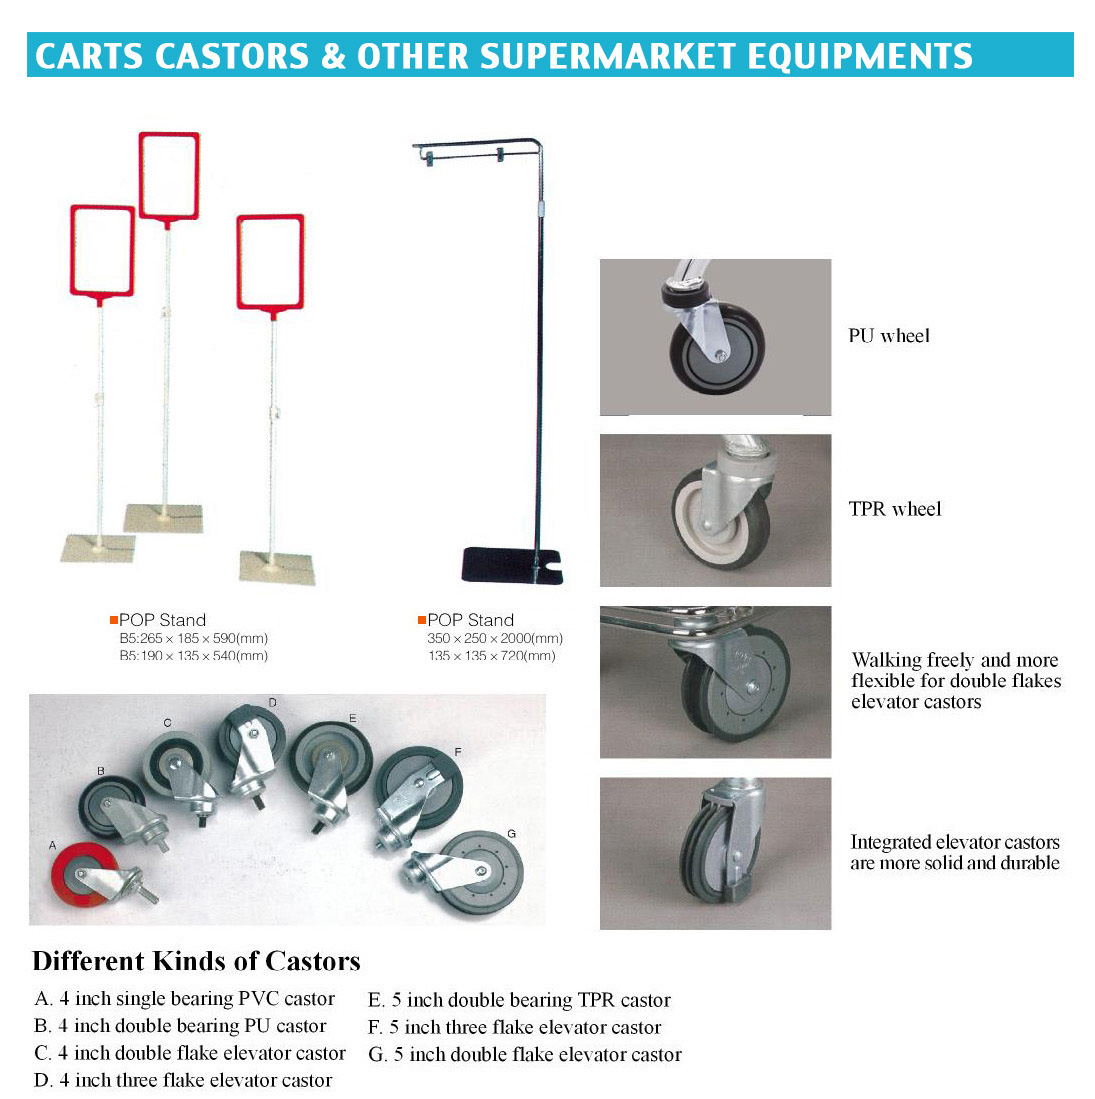 Carts Castors & Other Supermarket Equipment